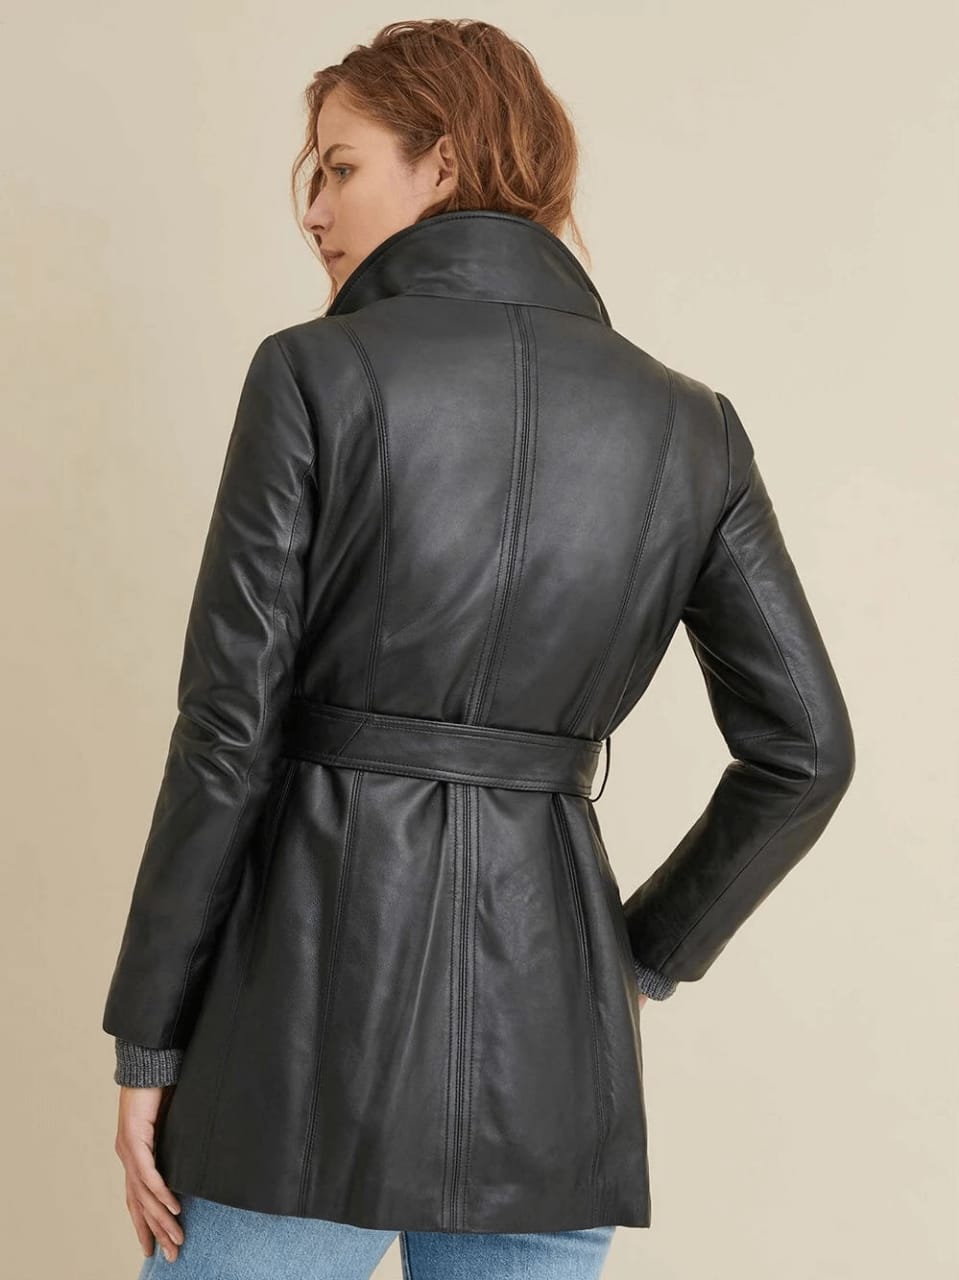 Women's Long Black Leather Coat